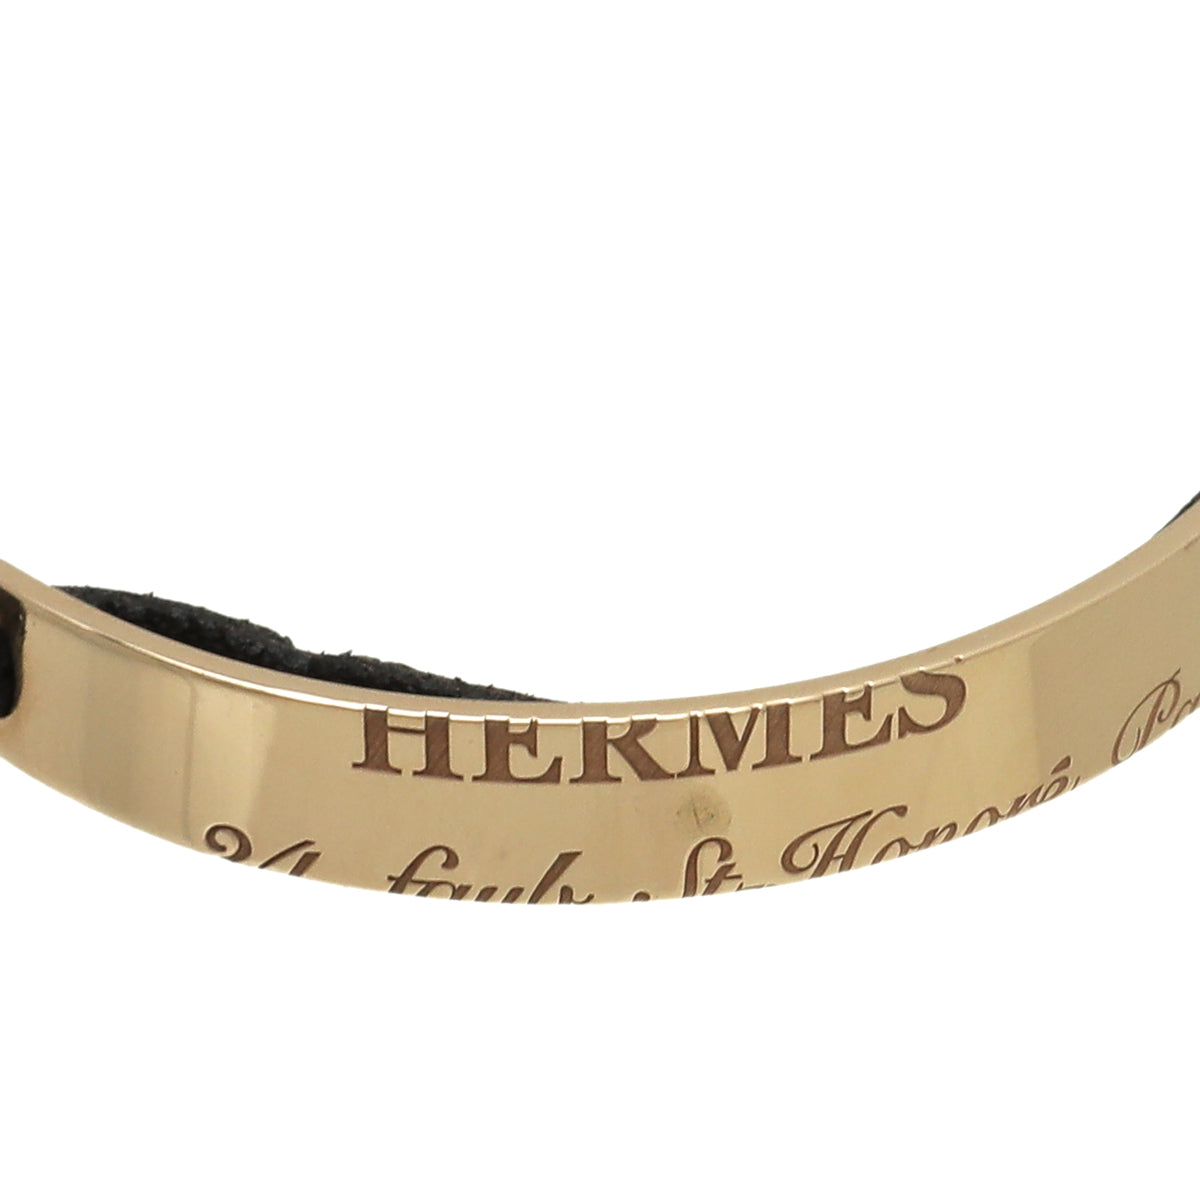 Replica Hermes JewelryWholesale Hermes JewelryCheap Hermes Jewelry